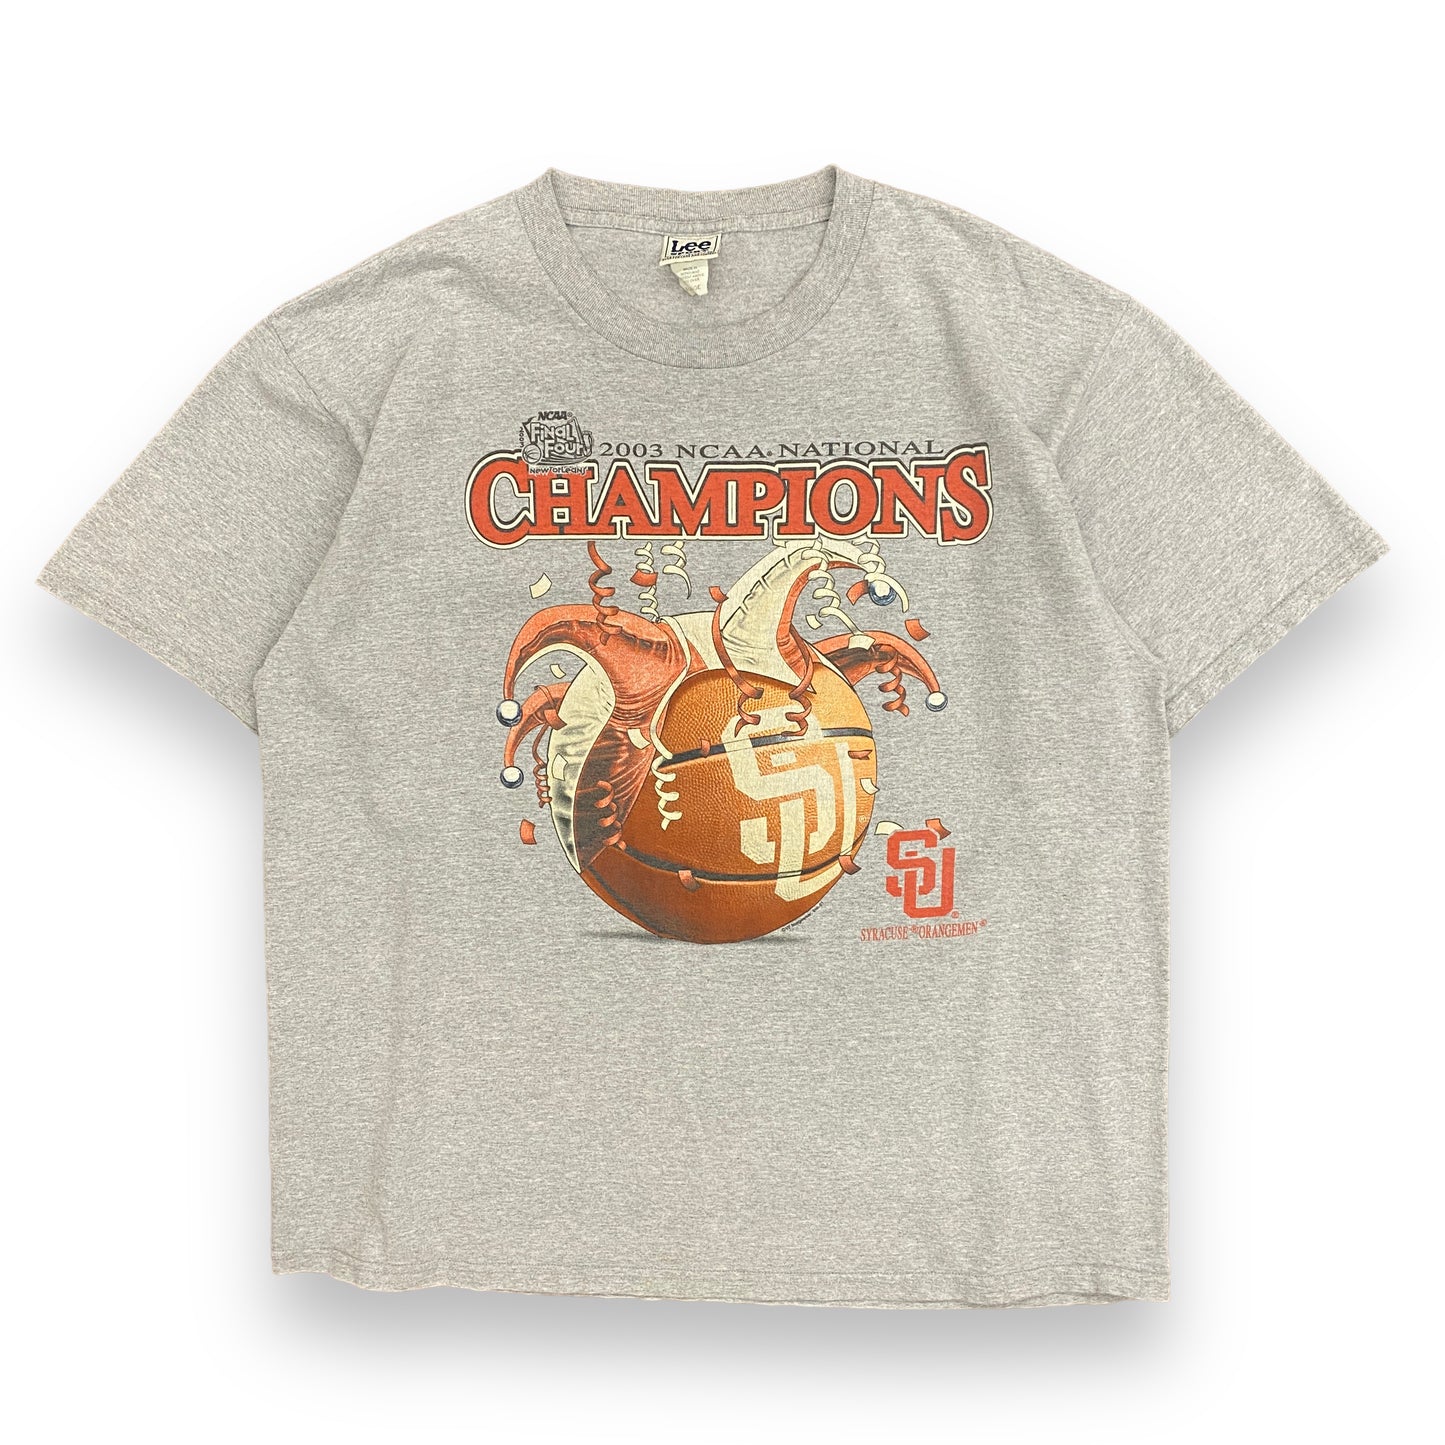 2003 Syracuse University Basketball National Champions Tee - Size XL